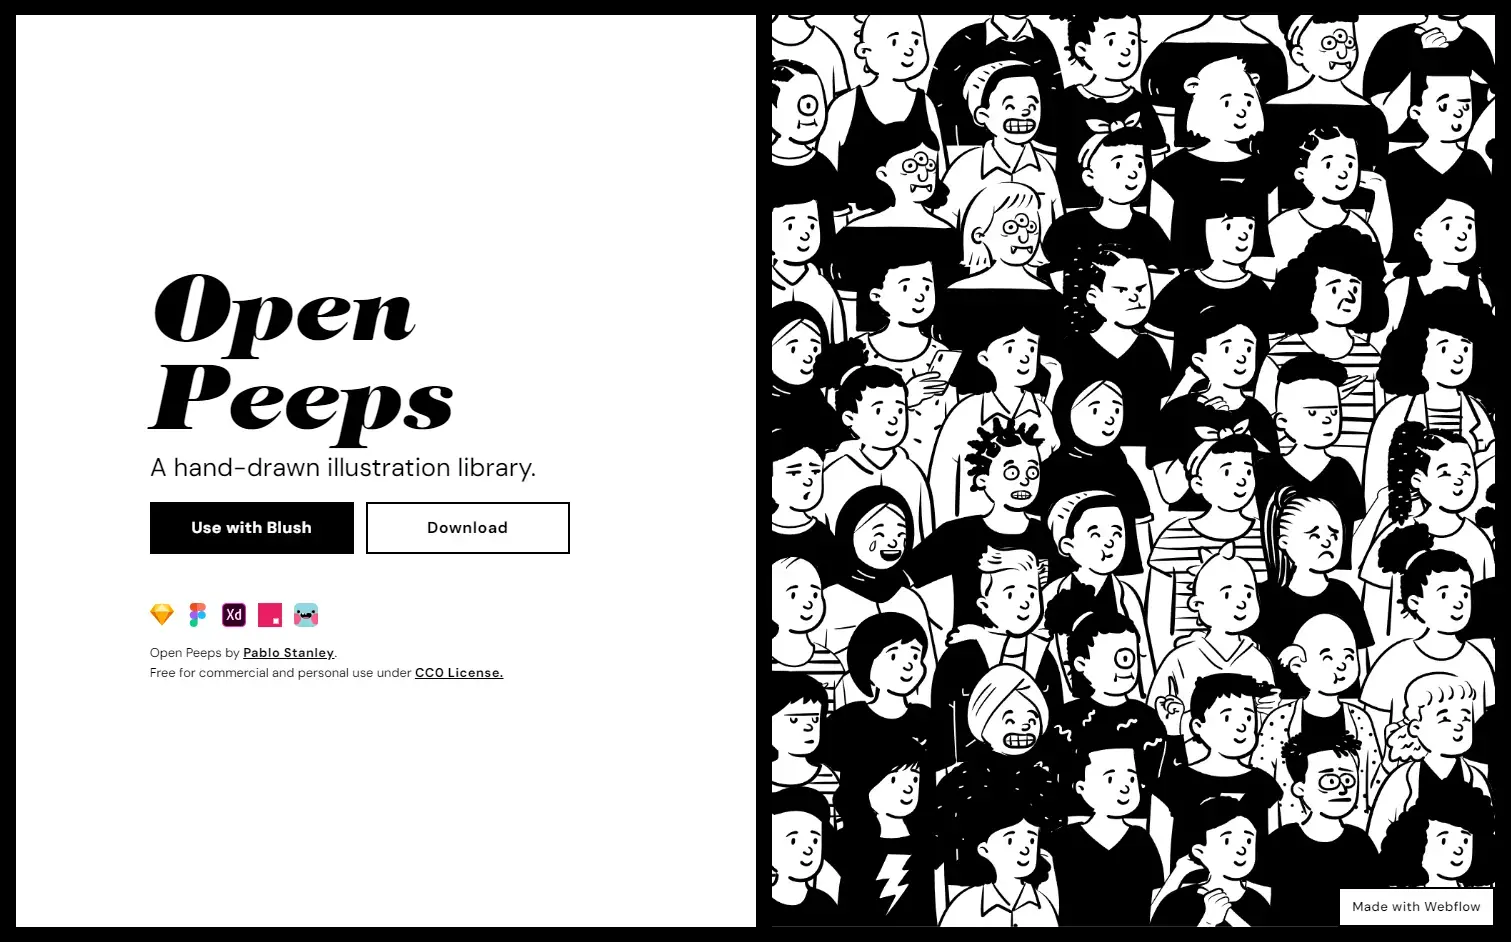 Blogduwebdesign ressources web banques illustrations themes open peeps